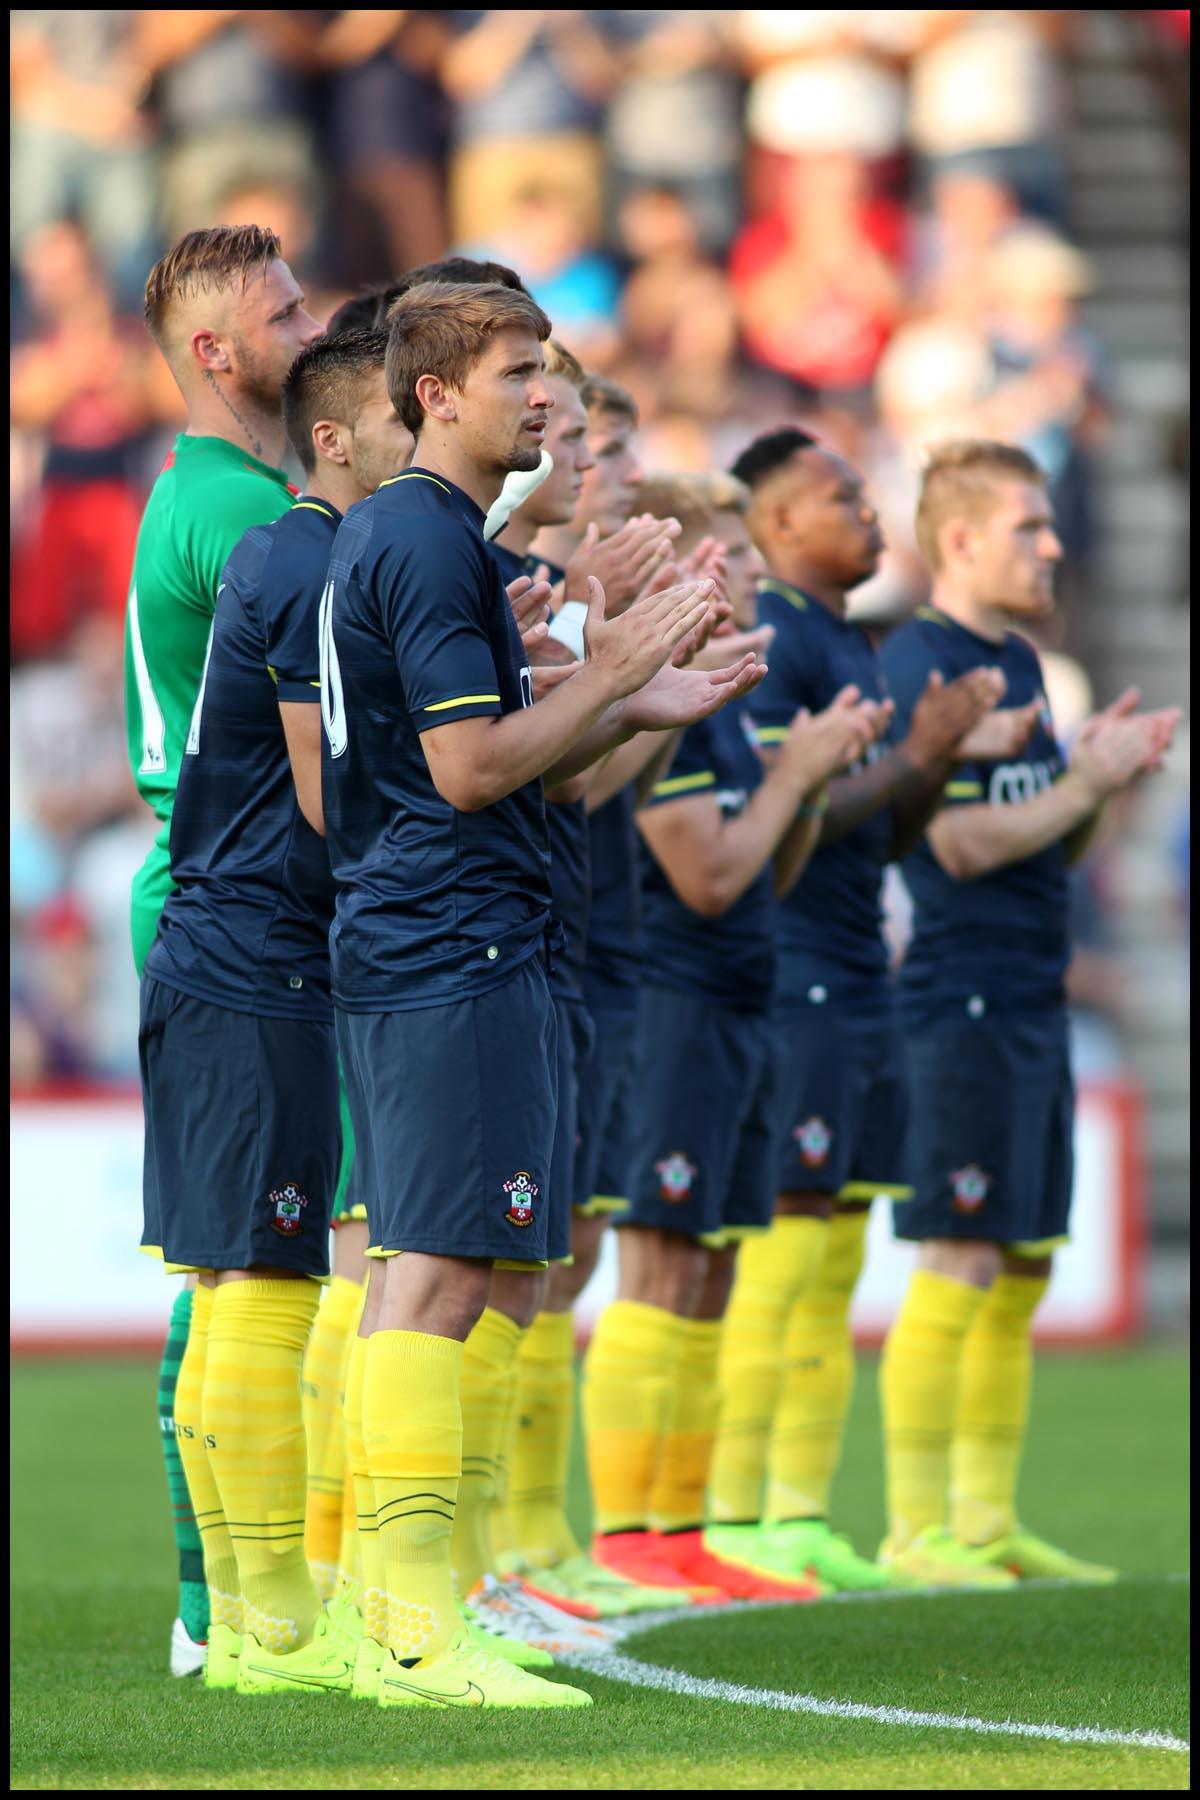 AFC Bournemouth v Saints pre-season friendly picture gallery.